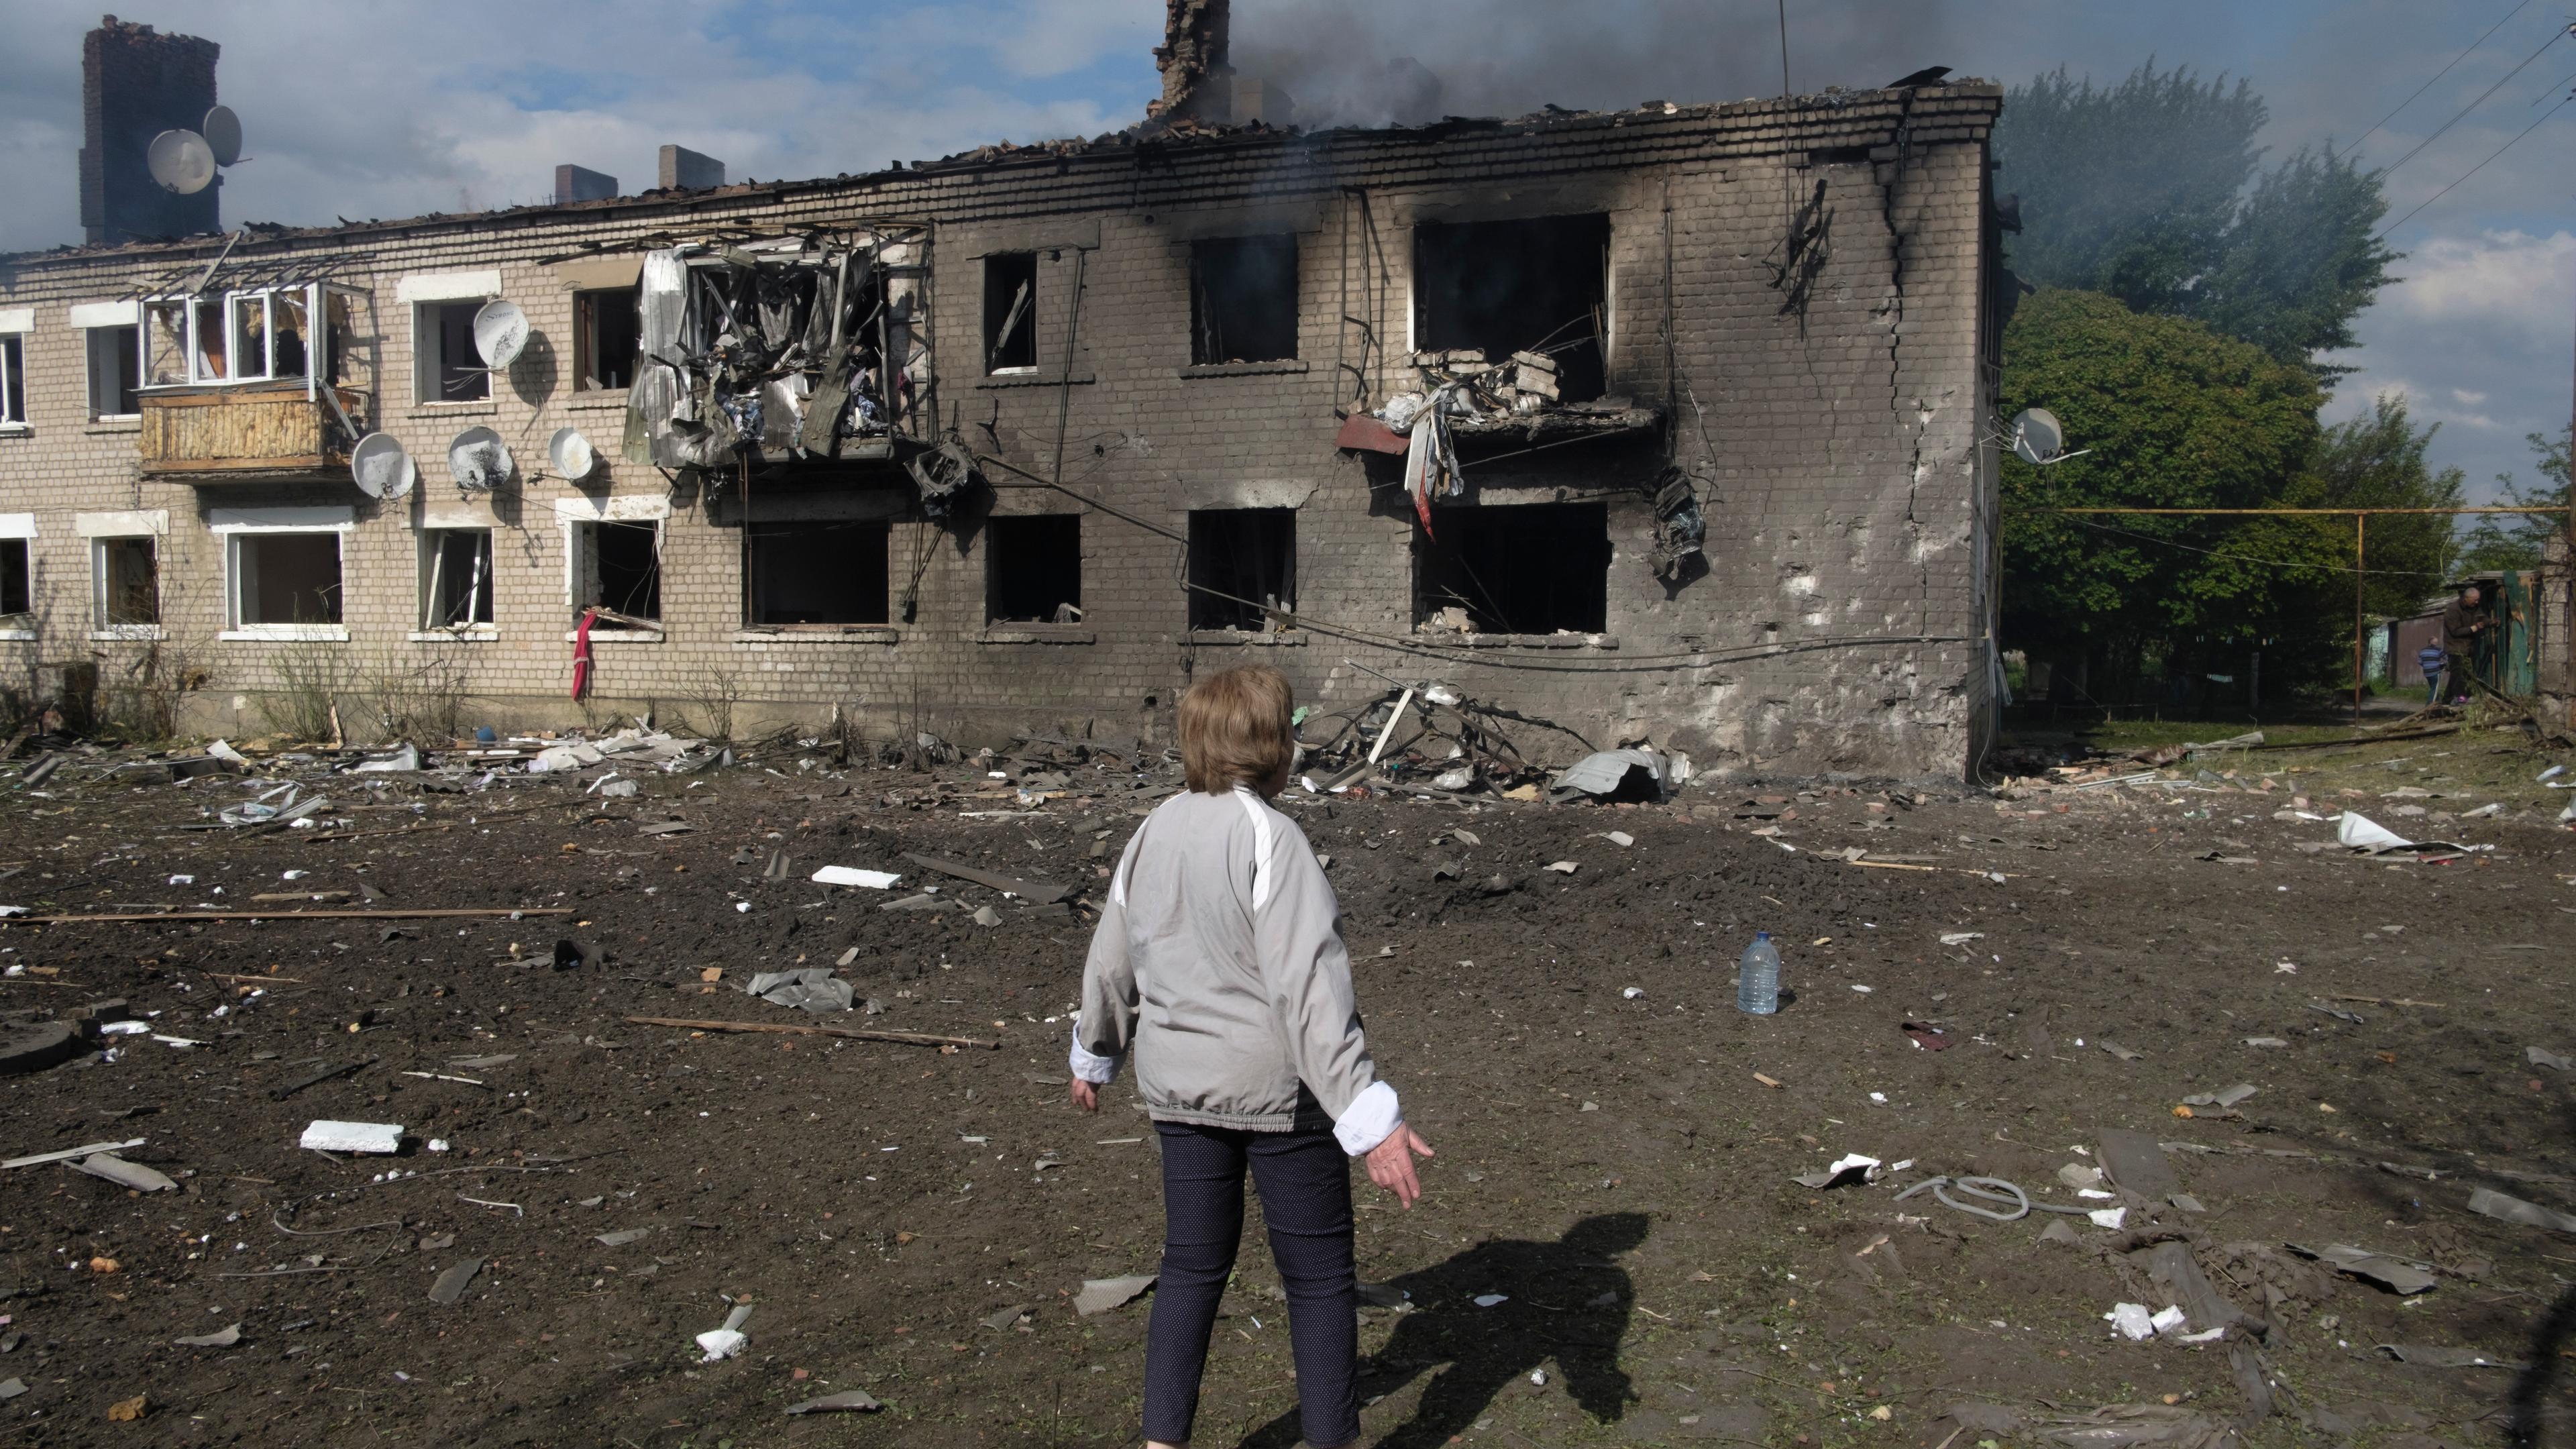 Ukrainians refuse evacuation amid increased Russian shelling in Kharkiv region